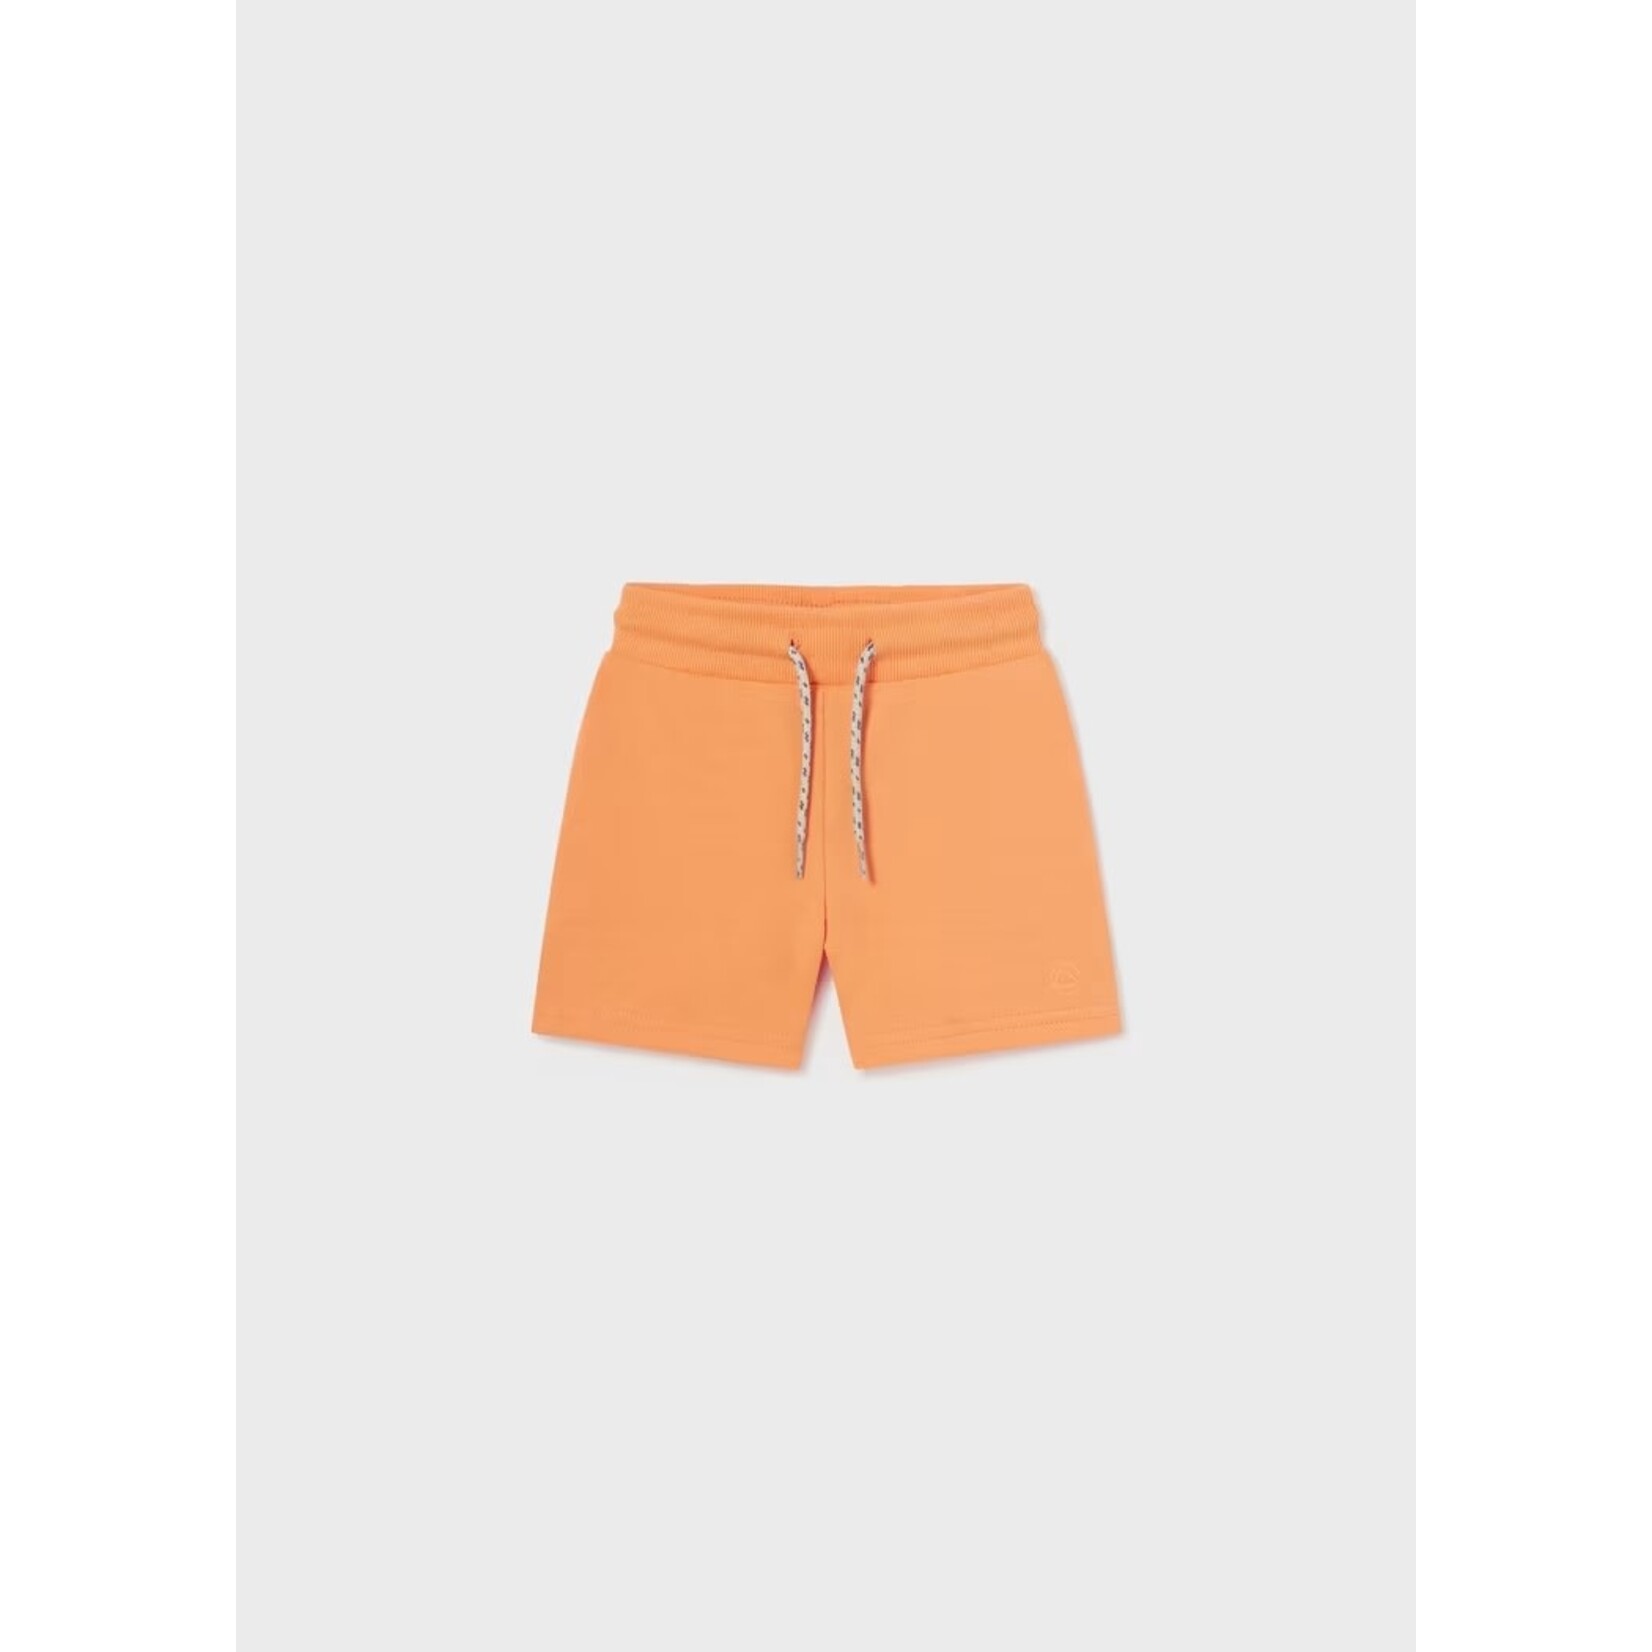 Mayoral MAYORAL - Cotton jersey shorts - tangerine orange